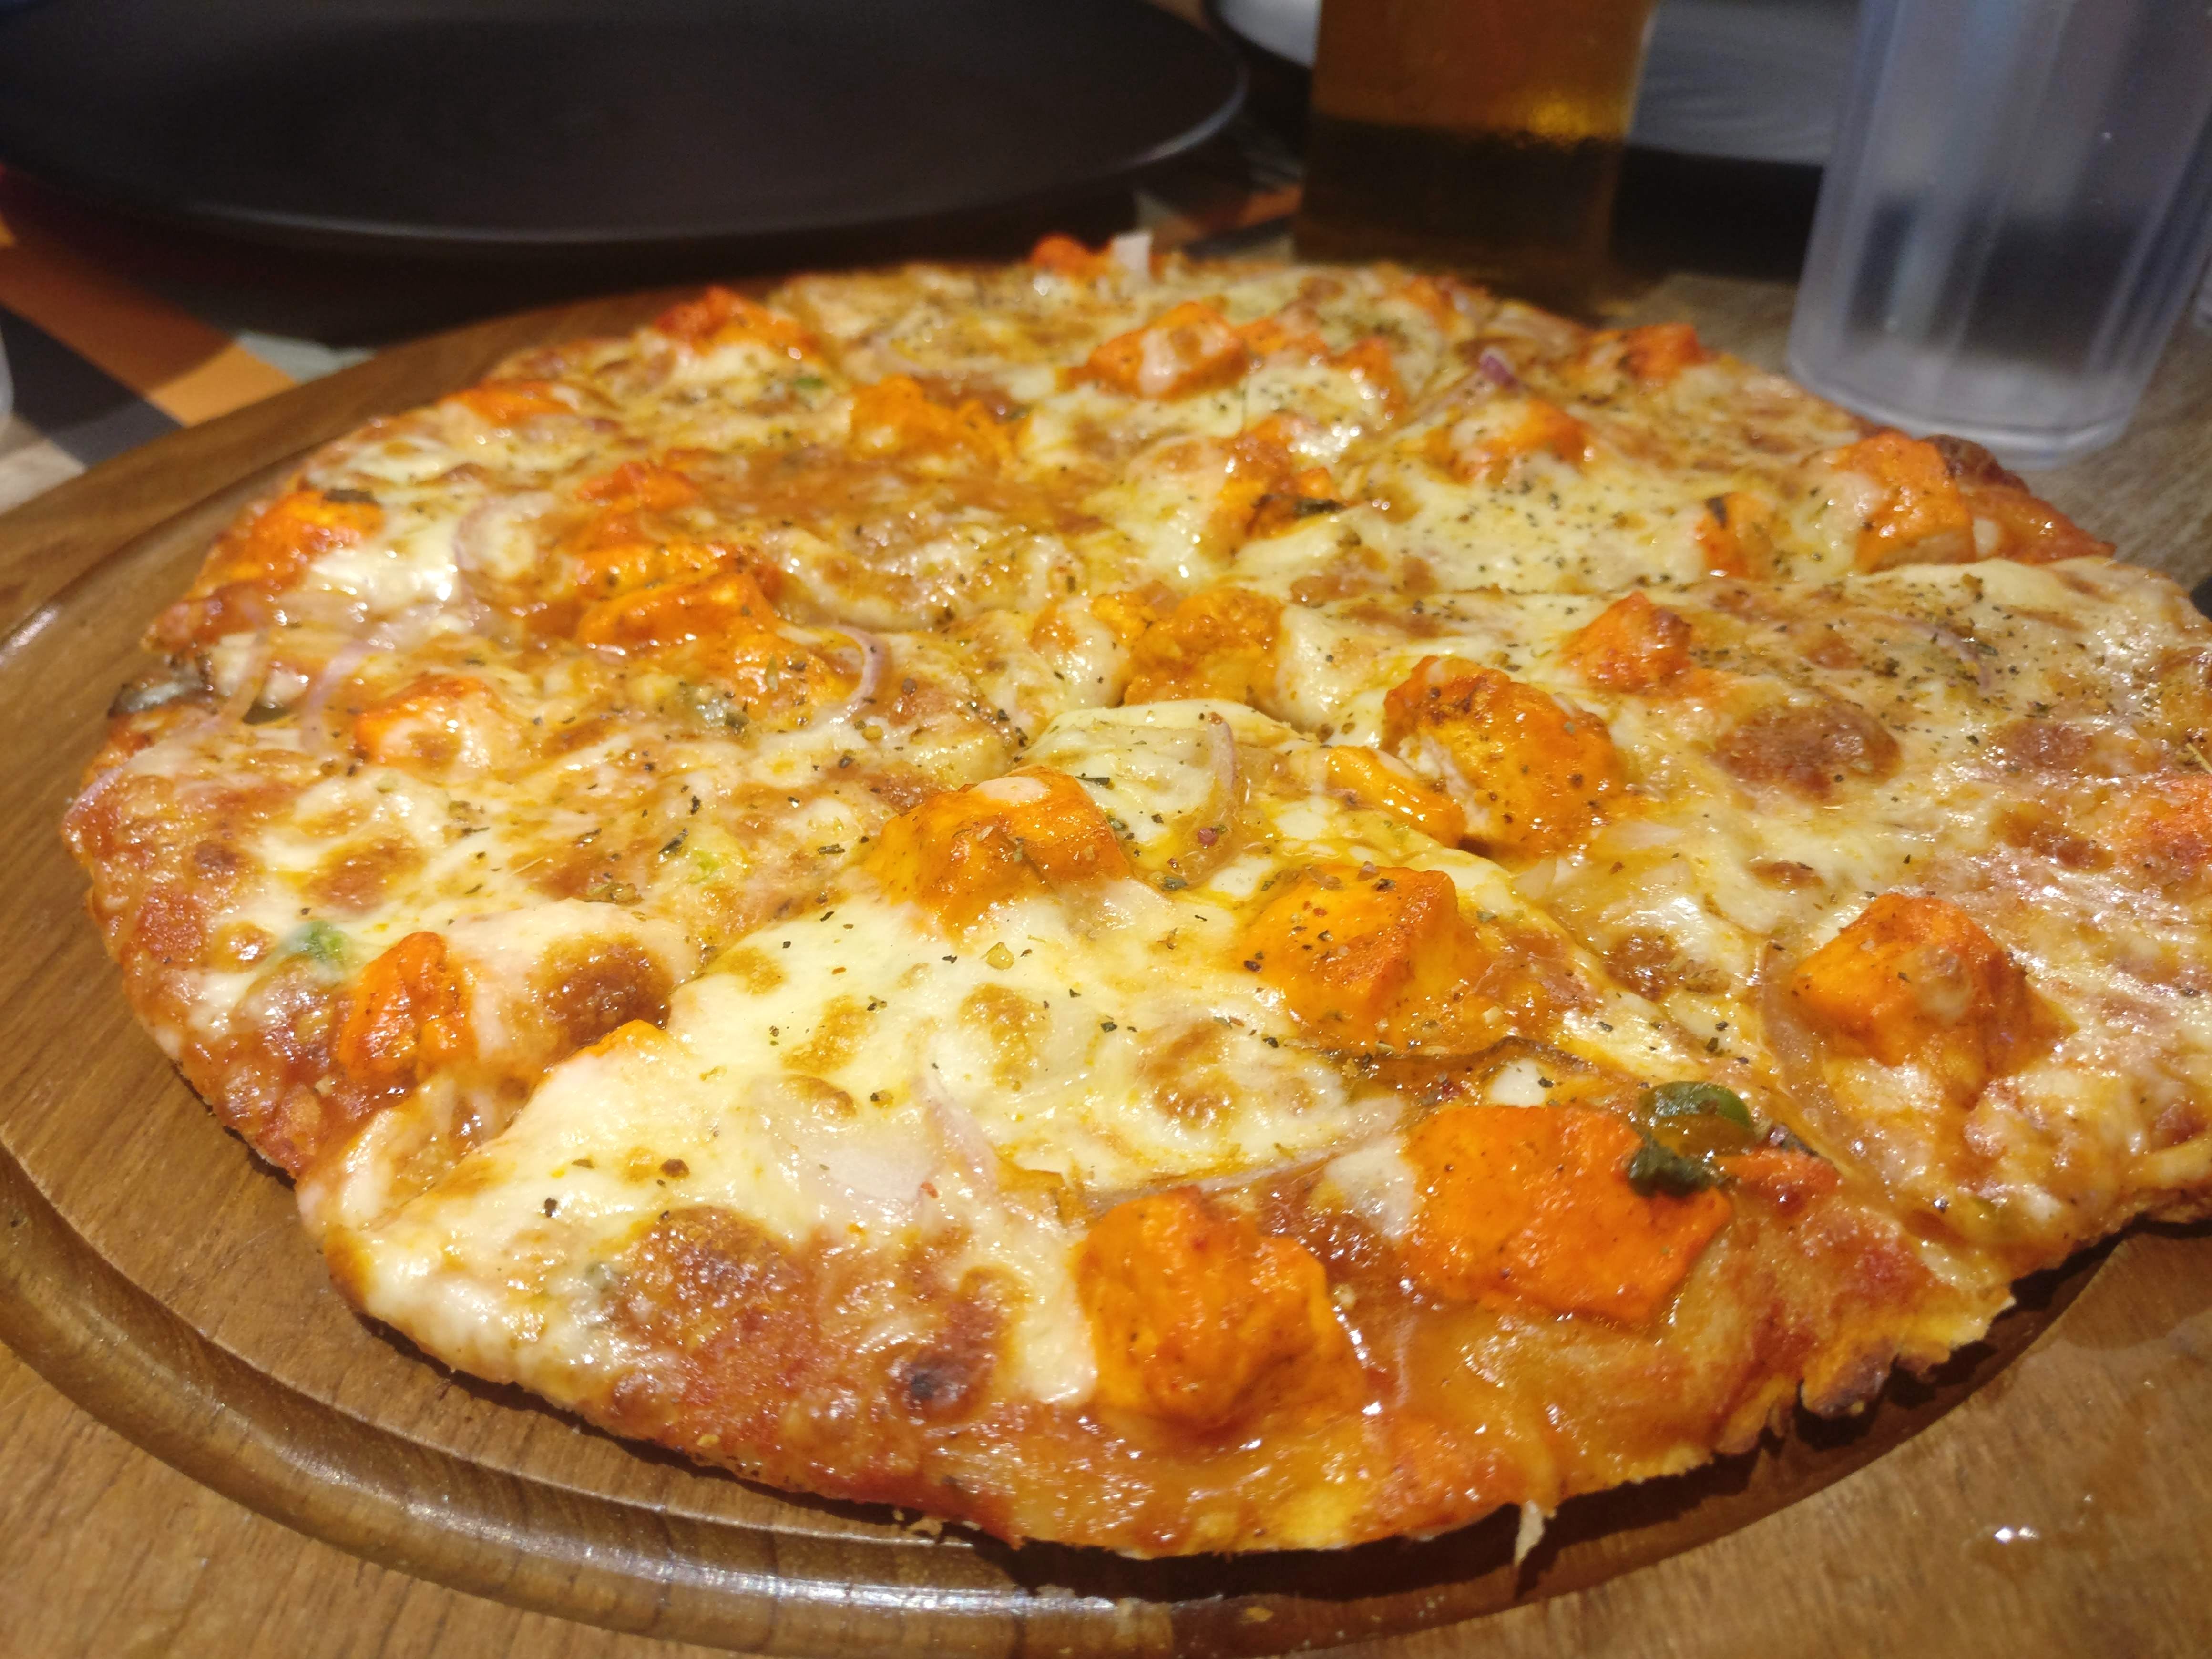 Dish,Food,Cuisine,Pizza,Pizza cheese,Sicilian pizza,California-style pizza,Ingredient,Flatbread,Tarte flambée